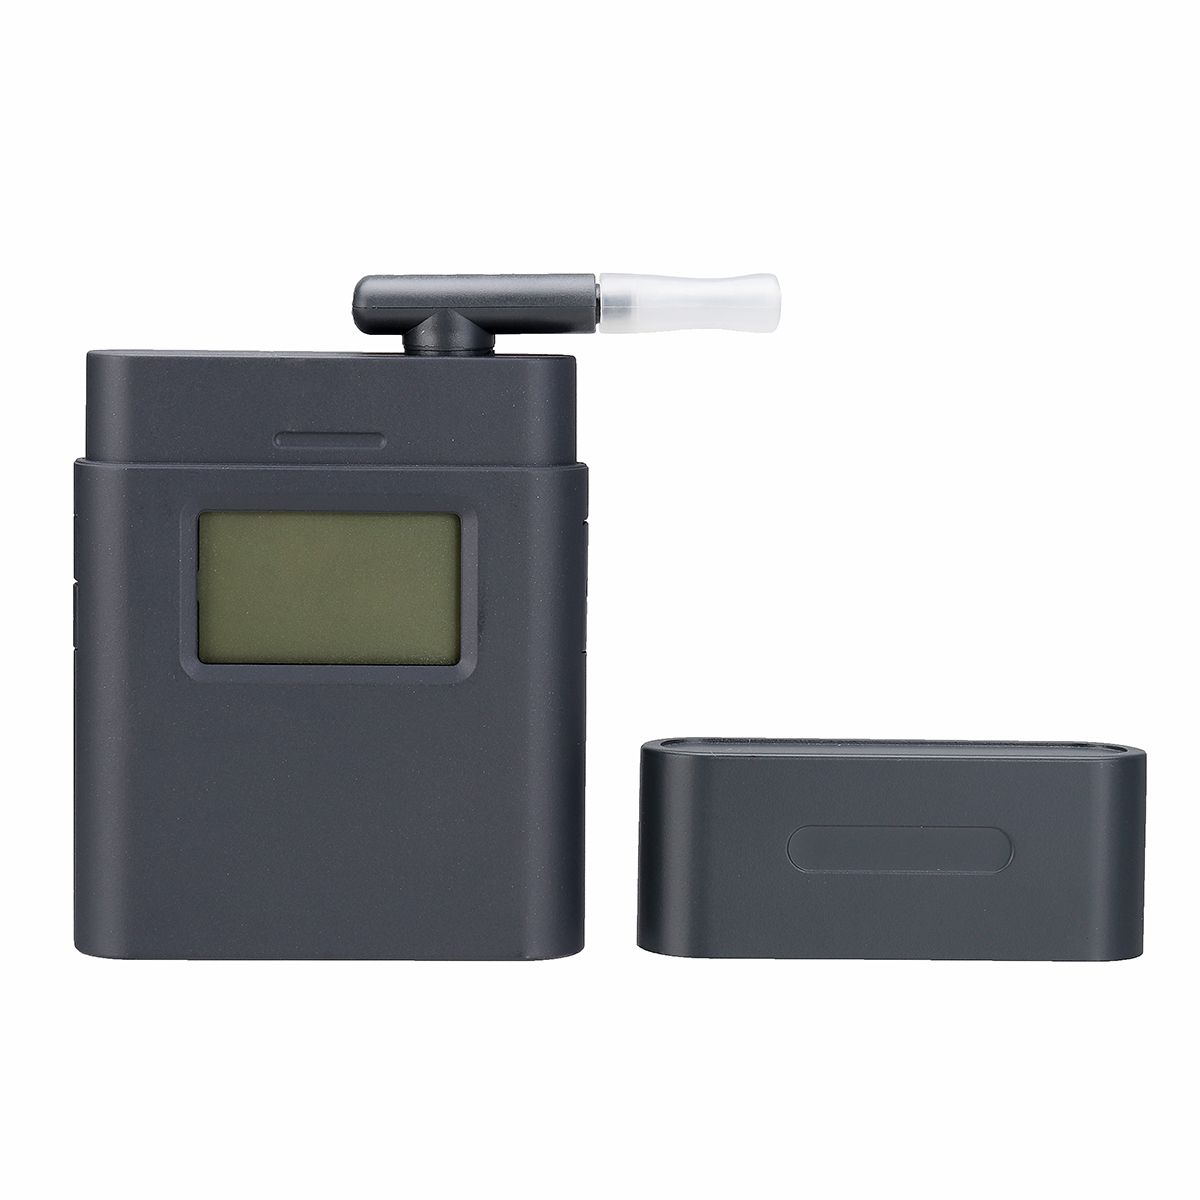 Digital-LCD-Breathalyzer-Meter-Police-Breath-Alcohol-Tester-Analyzer-Detector-1358426